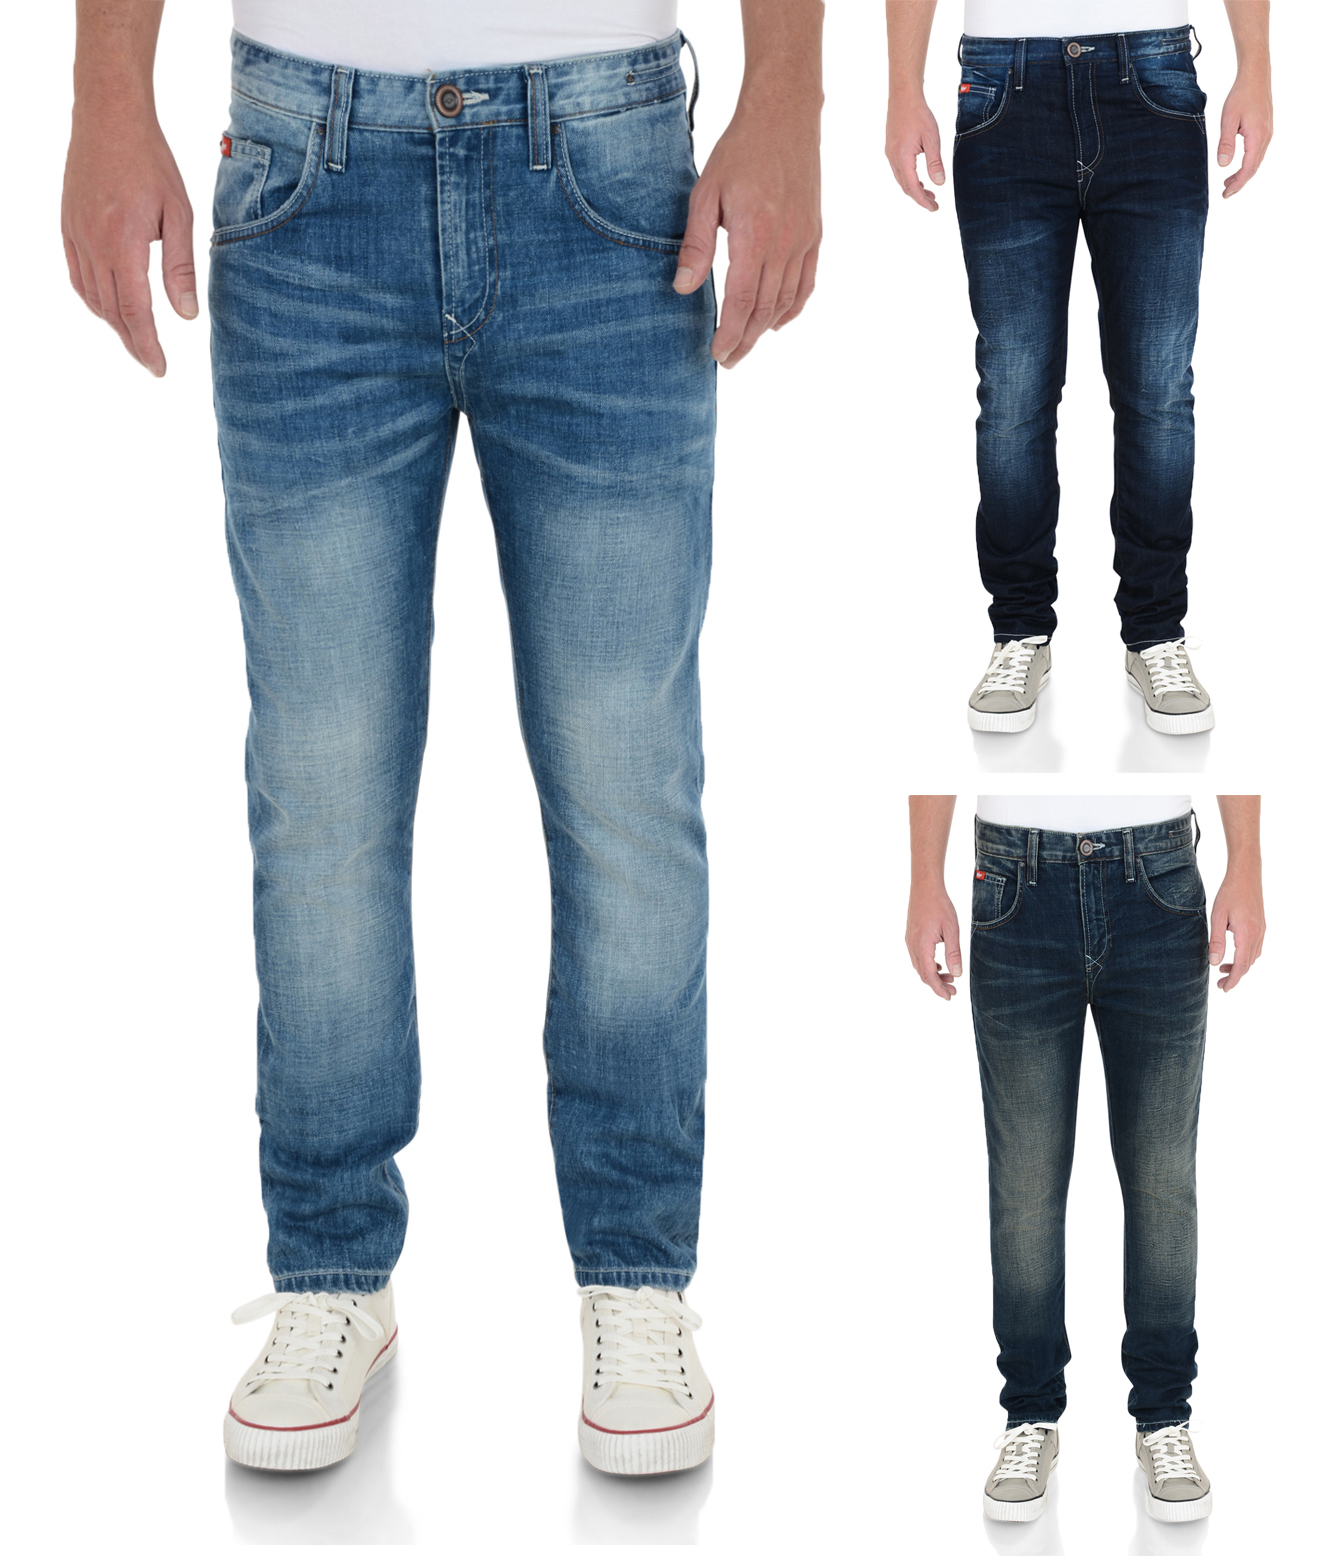 vintage style jeans mens